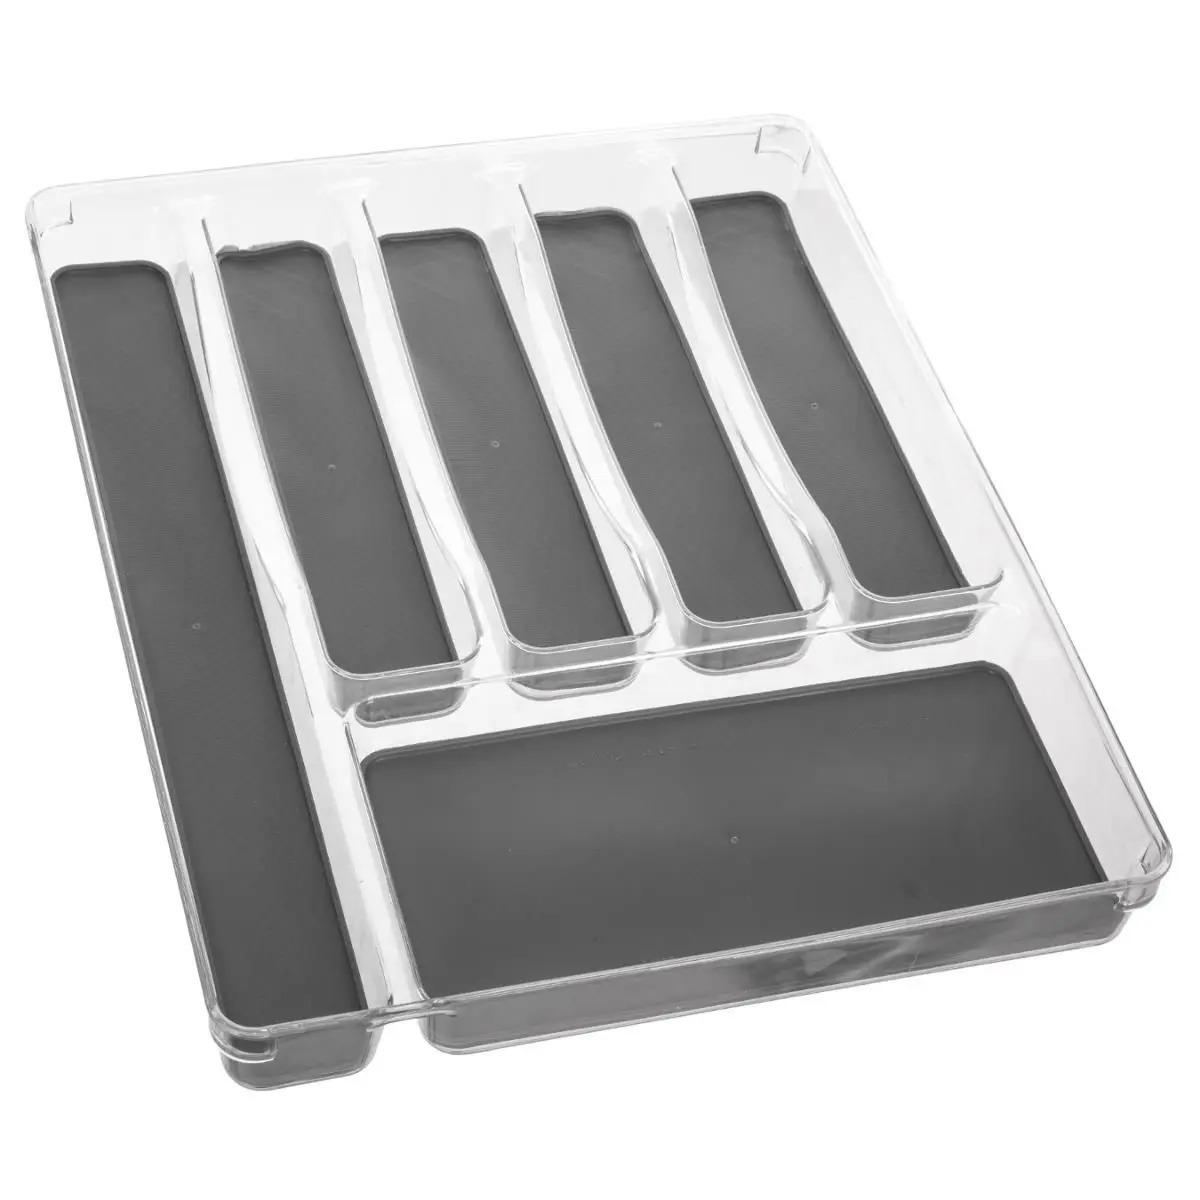 Bestekbak-keuken organizer Tidy Smart 6-vaks grijs transparant kunststof 40 x 32 cm